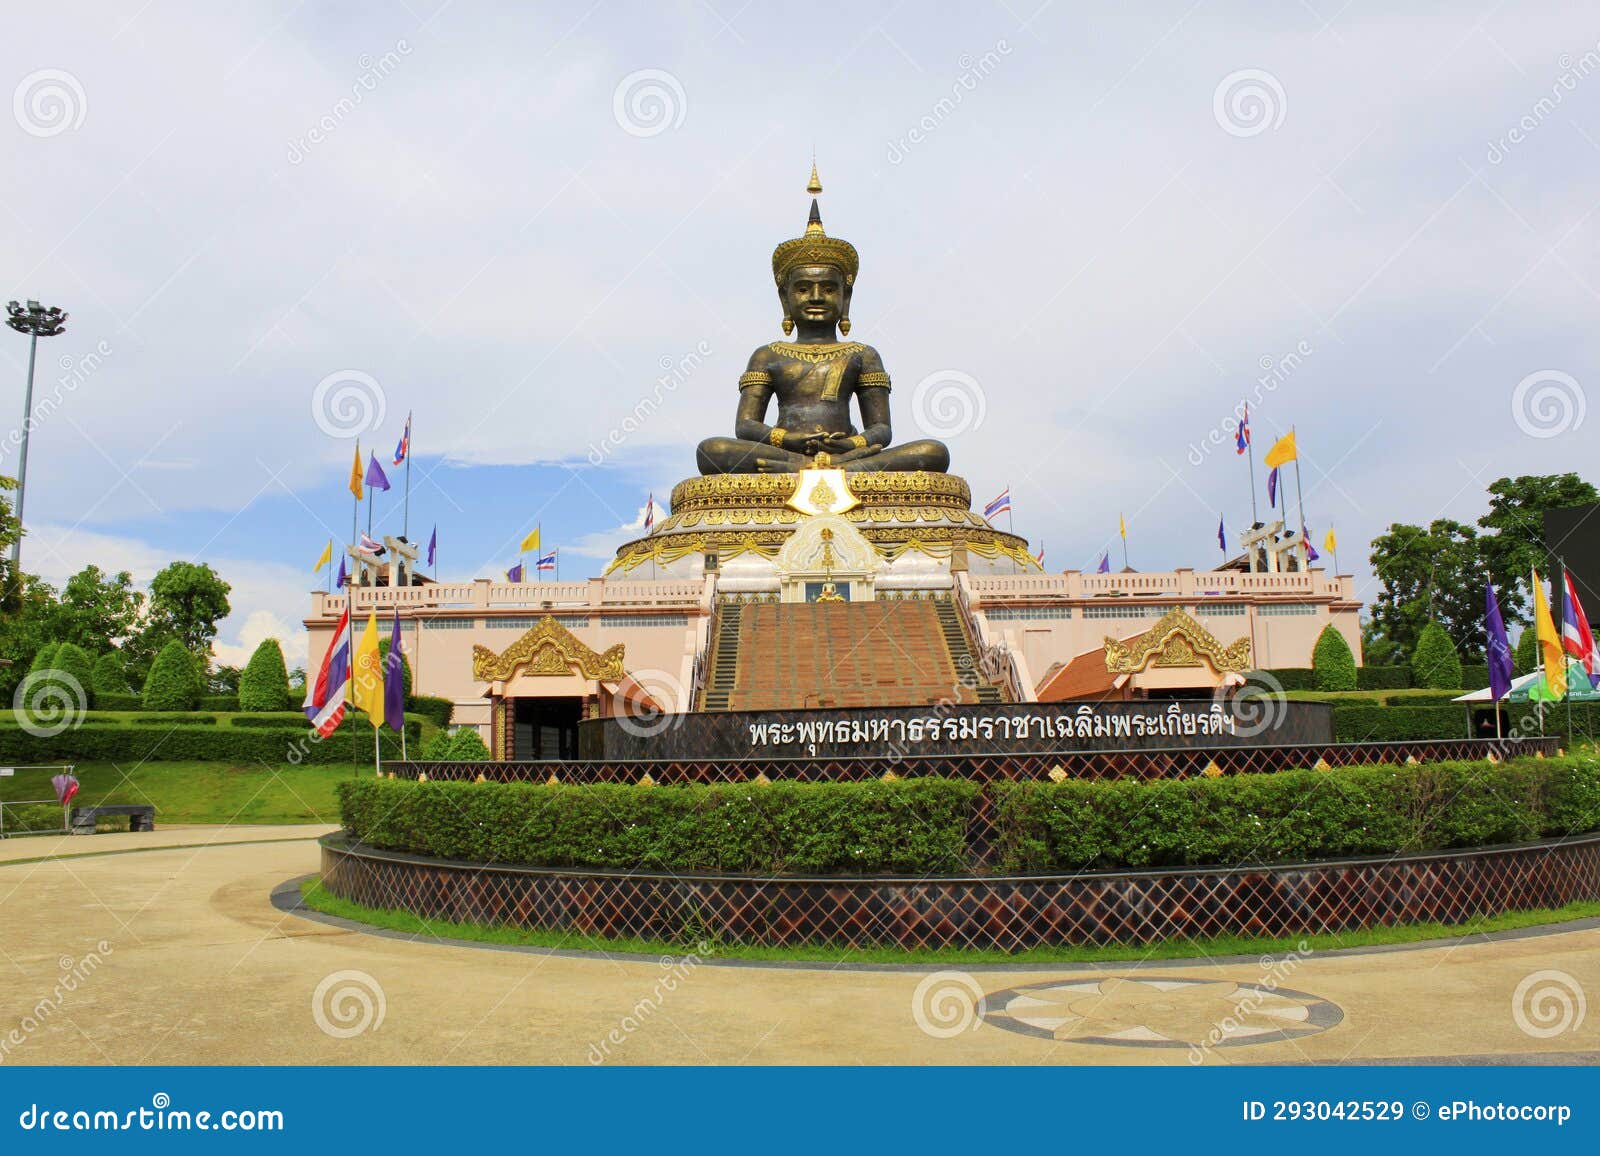 view from the main entrance of phra buddha maha dhammraja, phetchabun